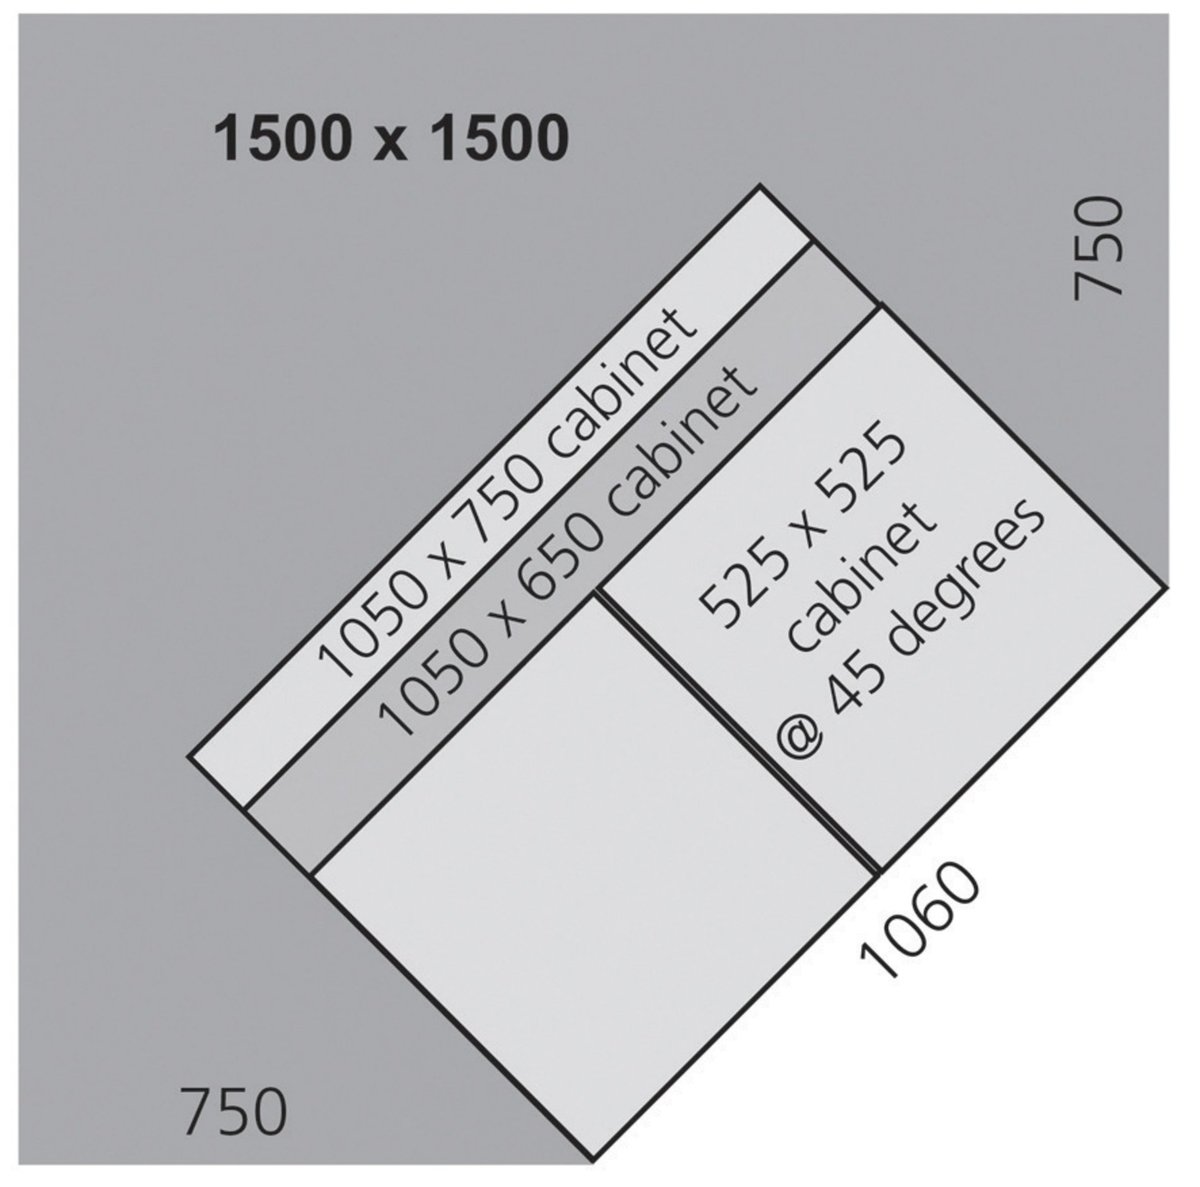 41201067.15V - Plan de Travail Cubio en Angle